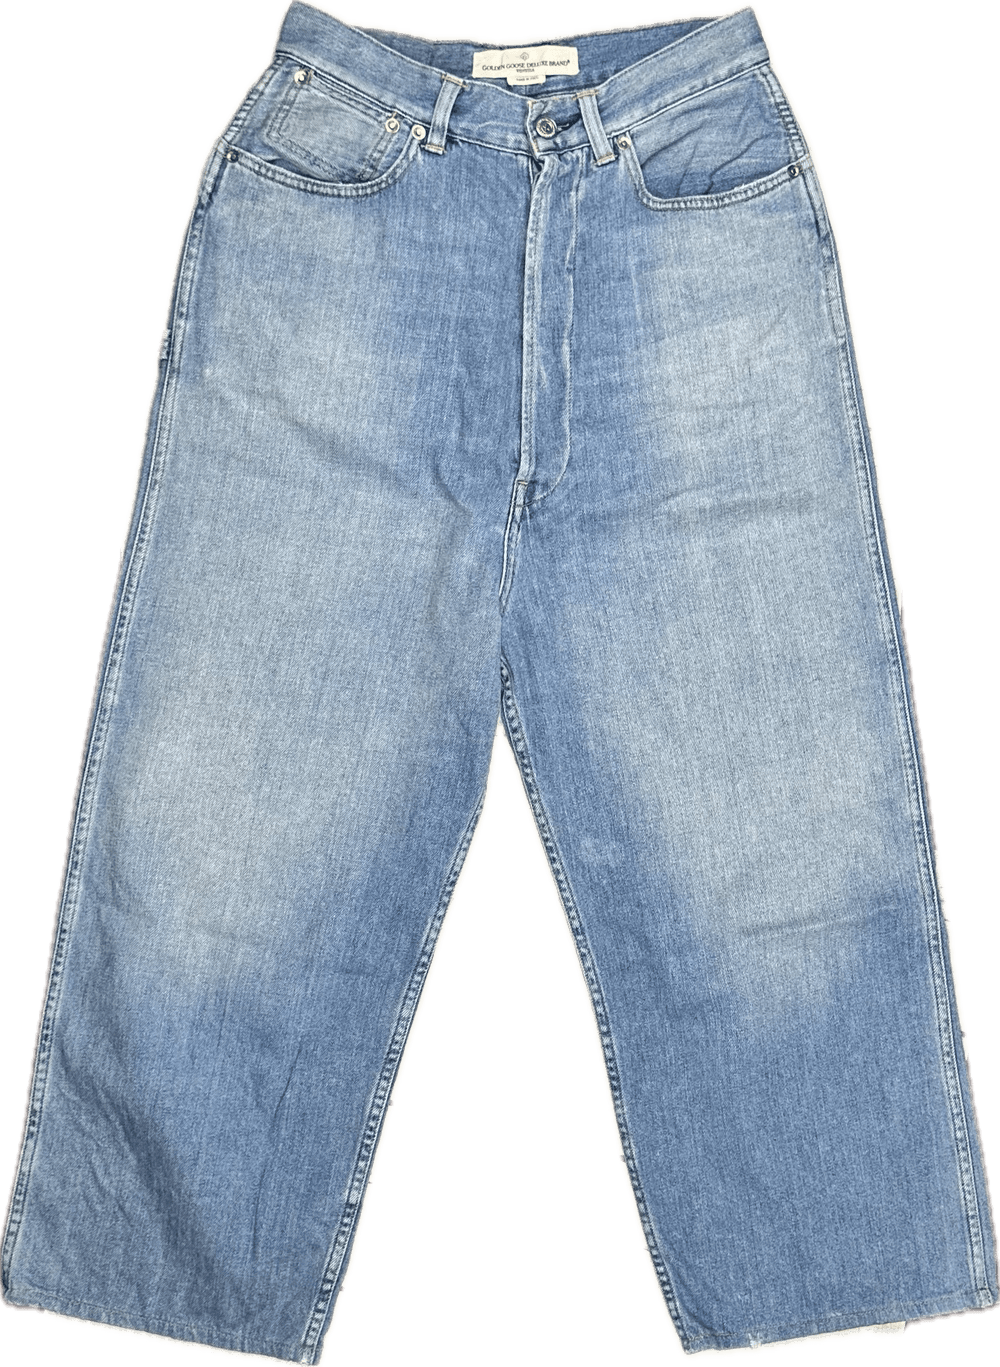 Golden Goose 'Breezy' Work Fit Jeans -Size 27 - Jean Pool